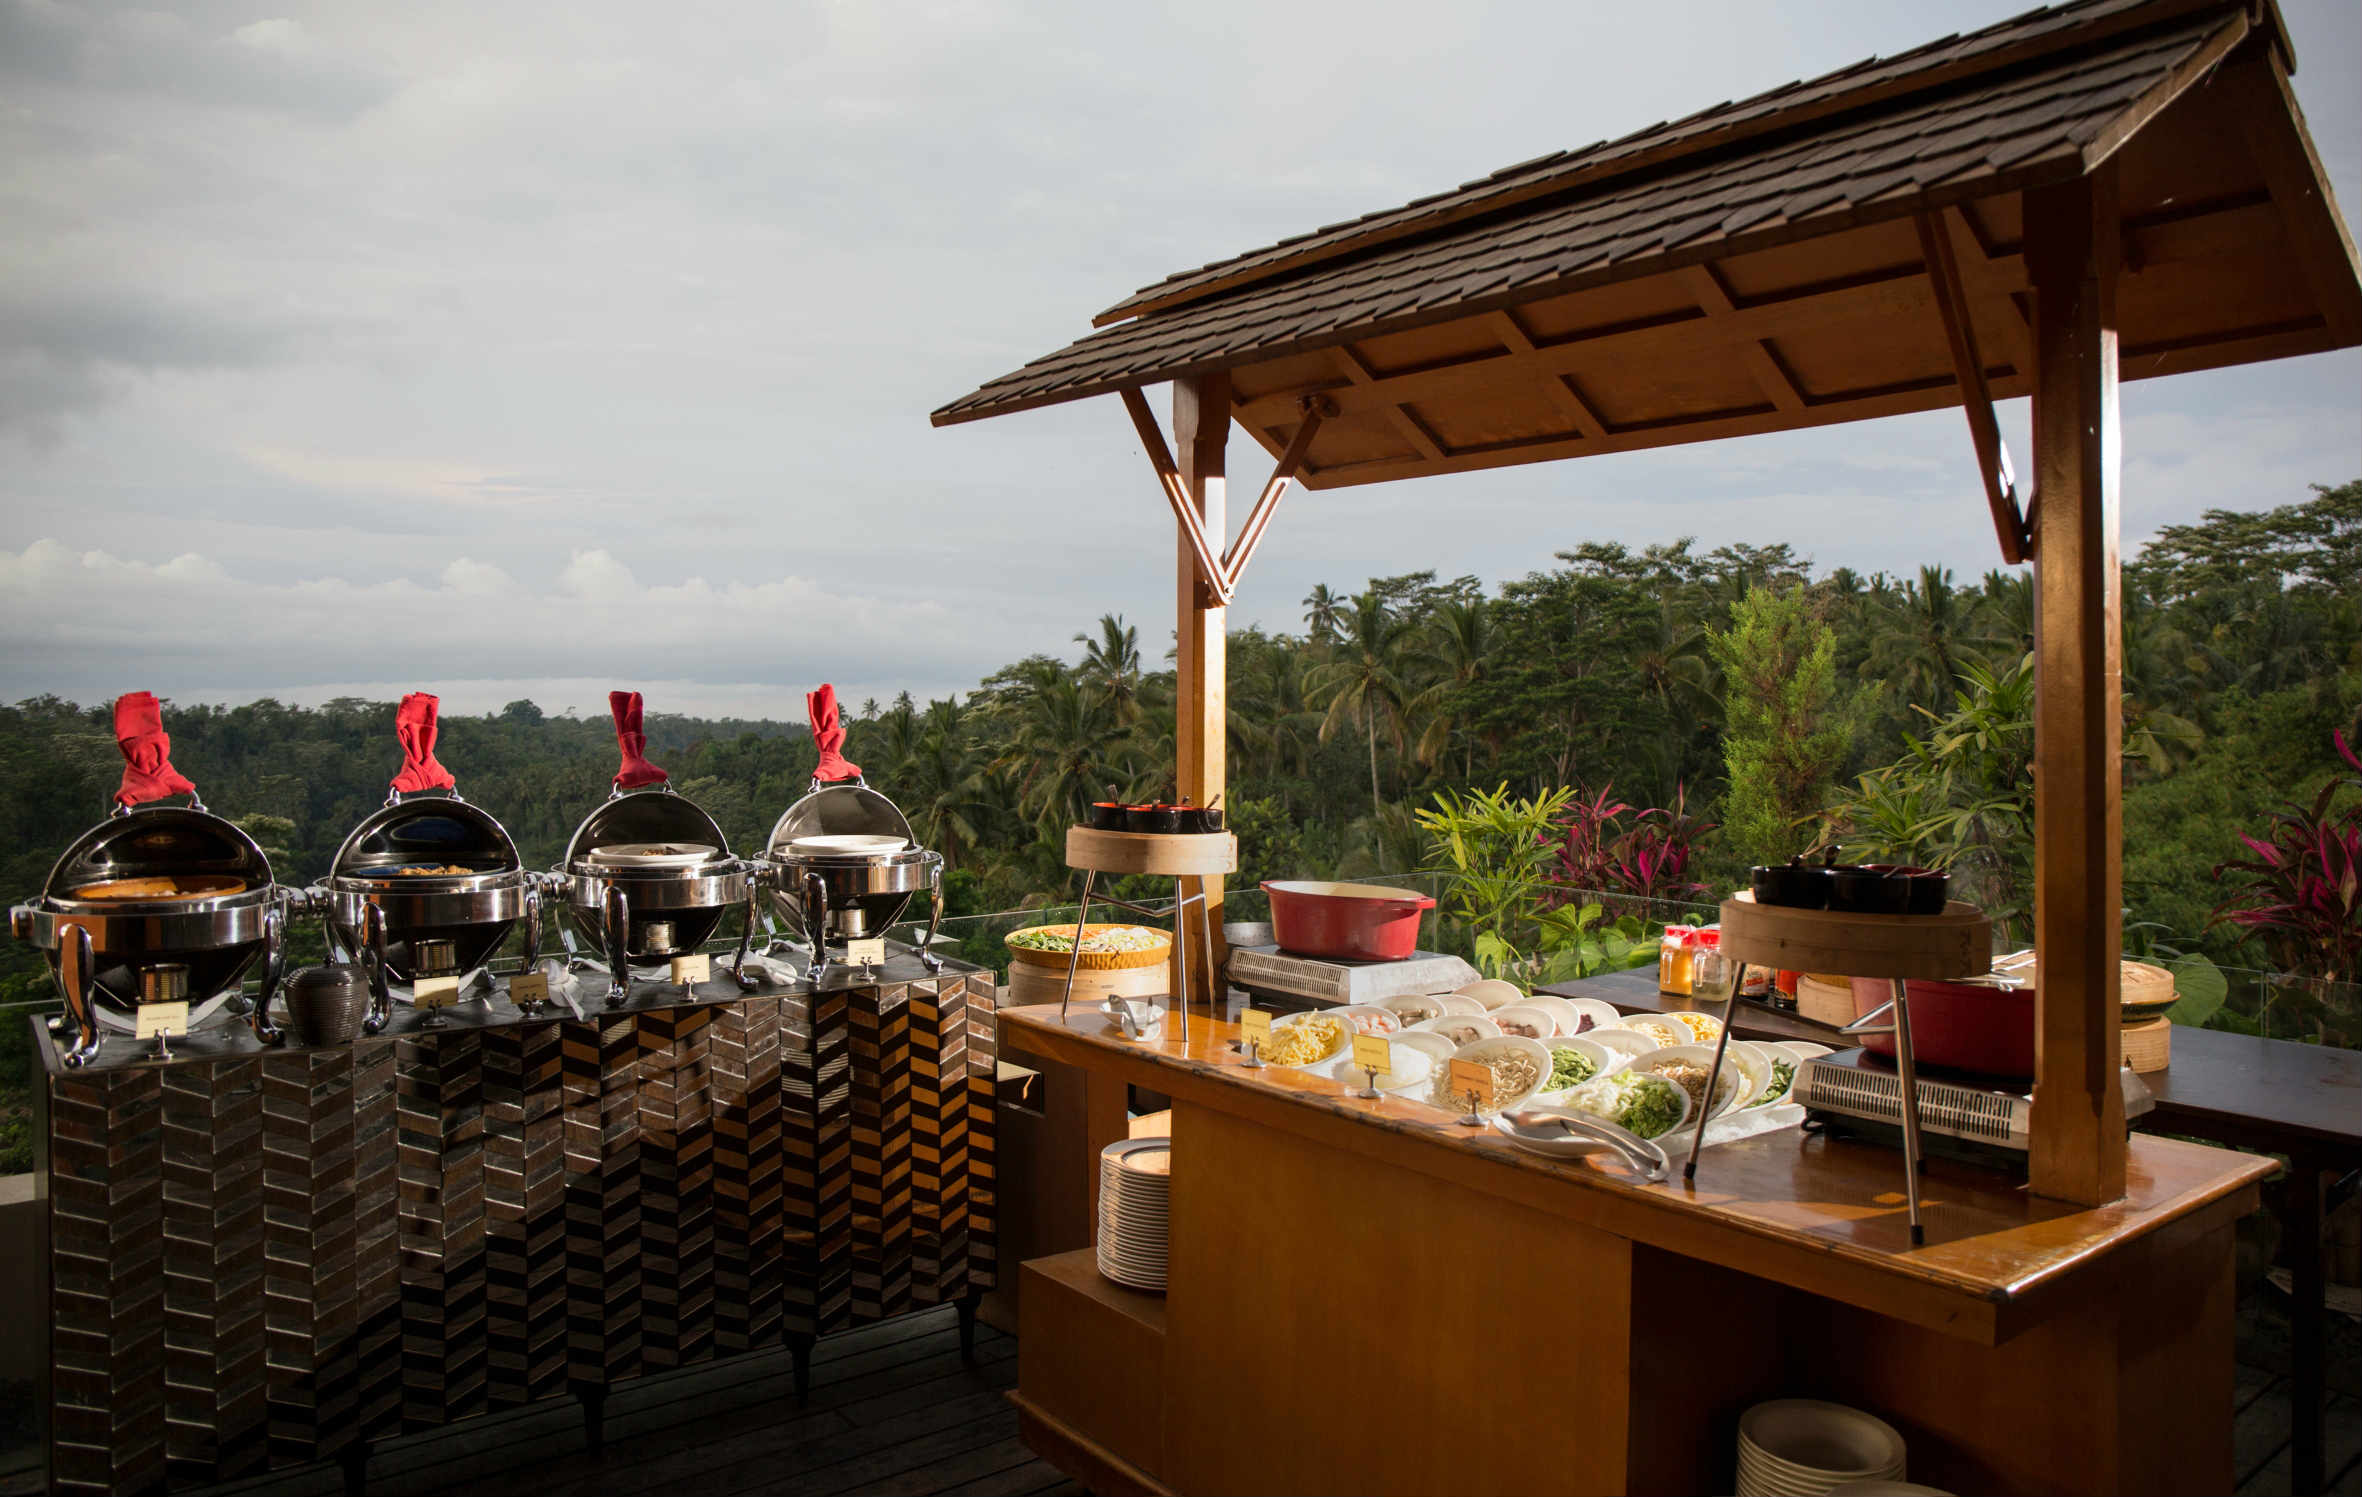 , MasterChef Indonesia judge Degan Septoadji joins Padma Resort as corporate chef